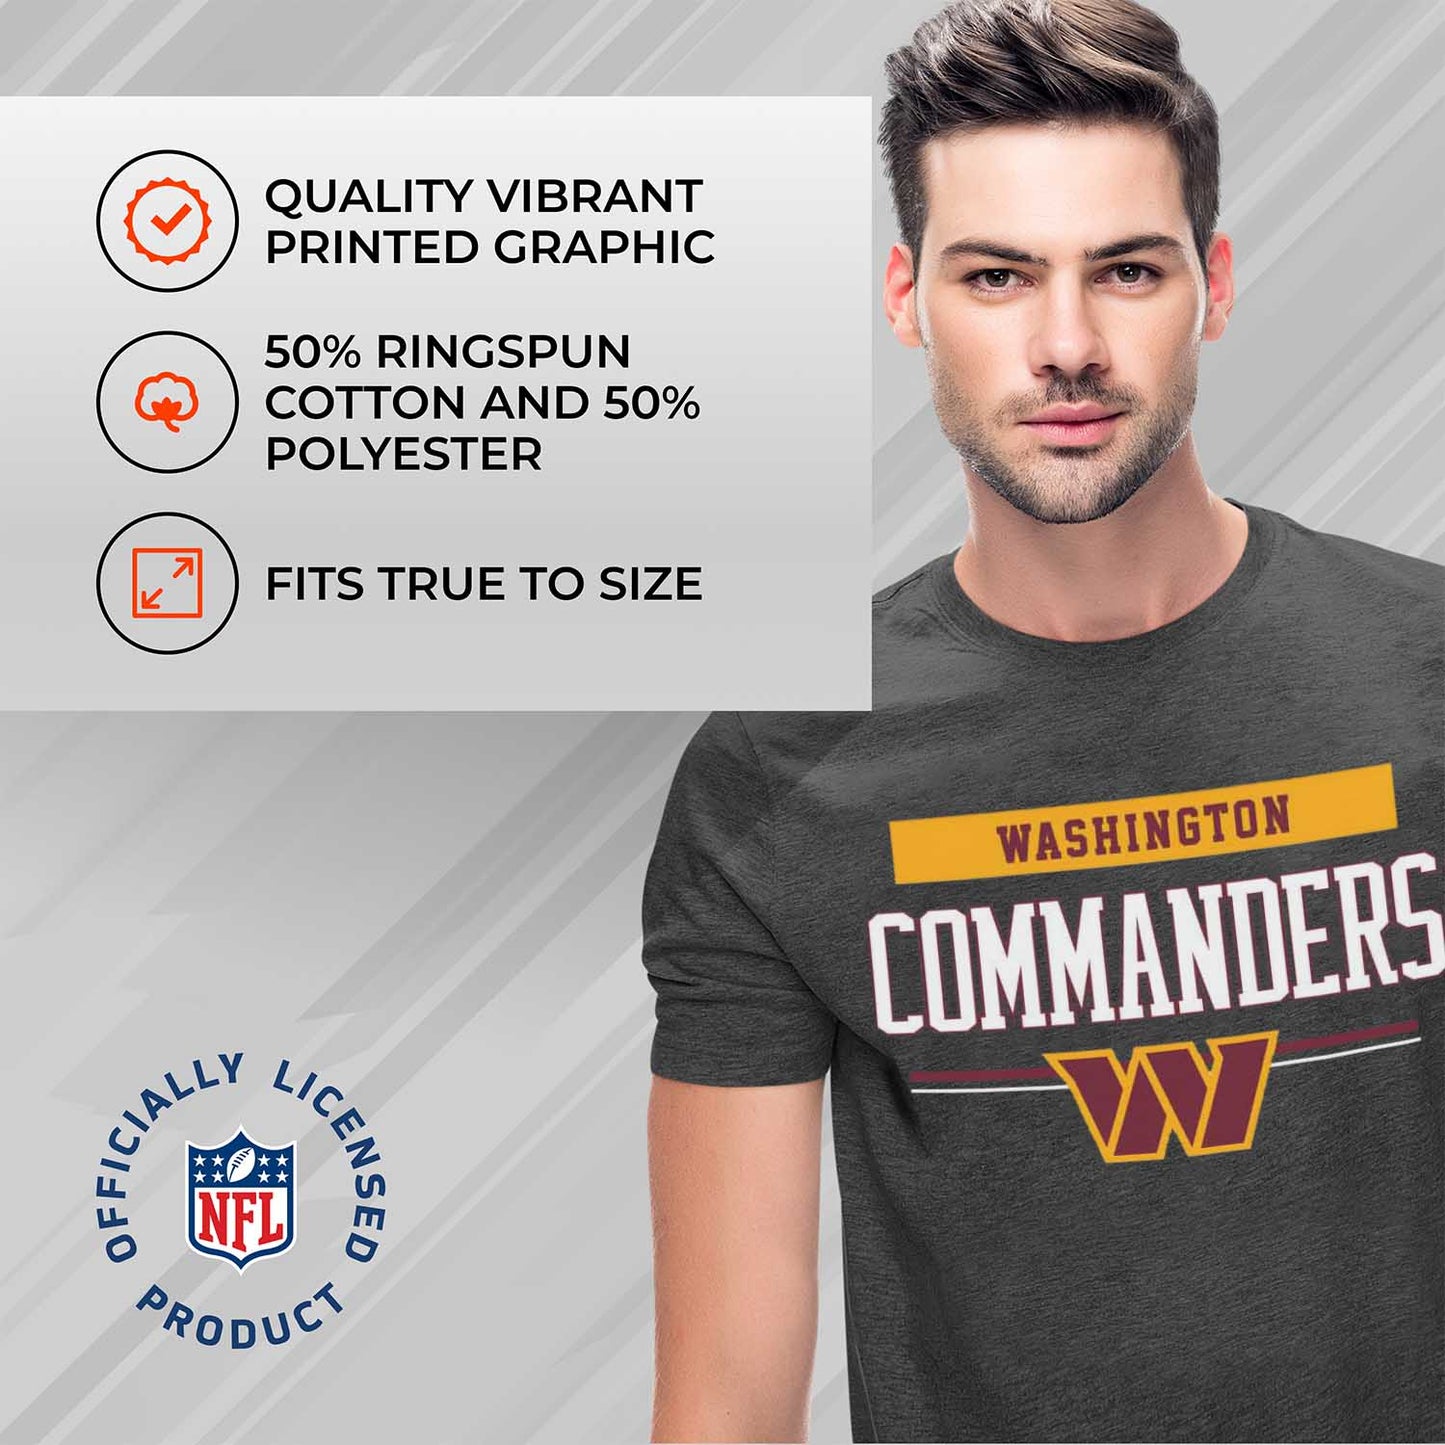 Washington Commanders NFL Adult Team Block Tagless T-Shirt - Charcoal